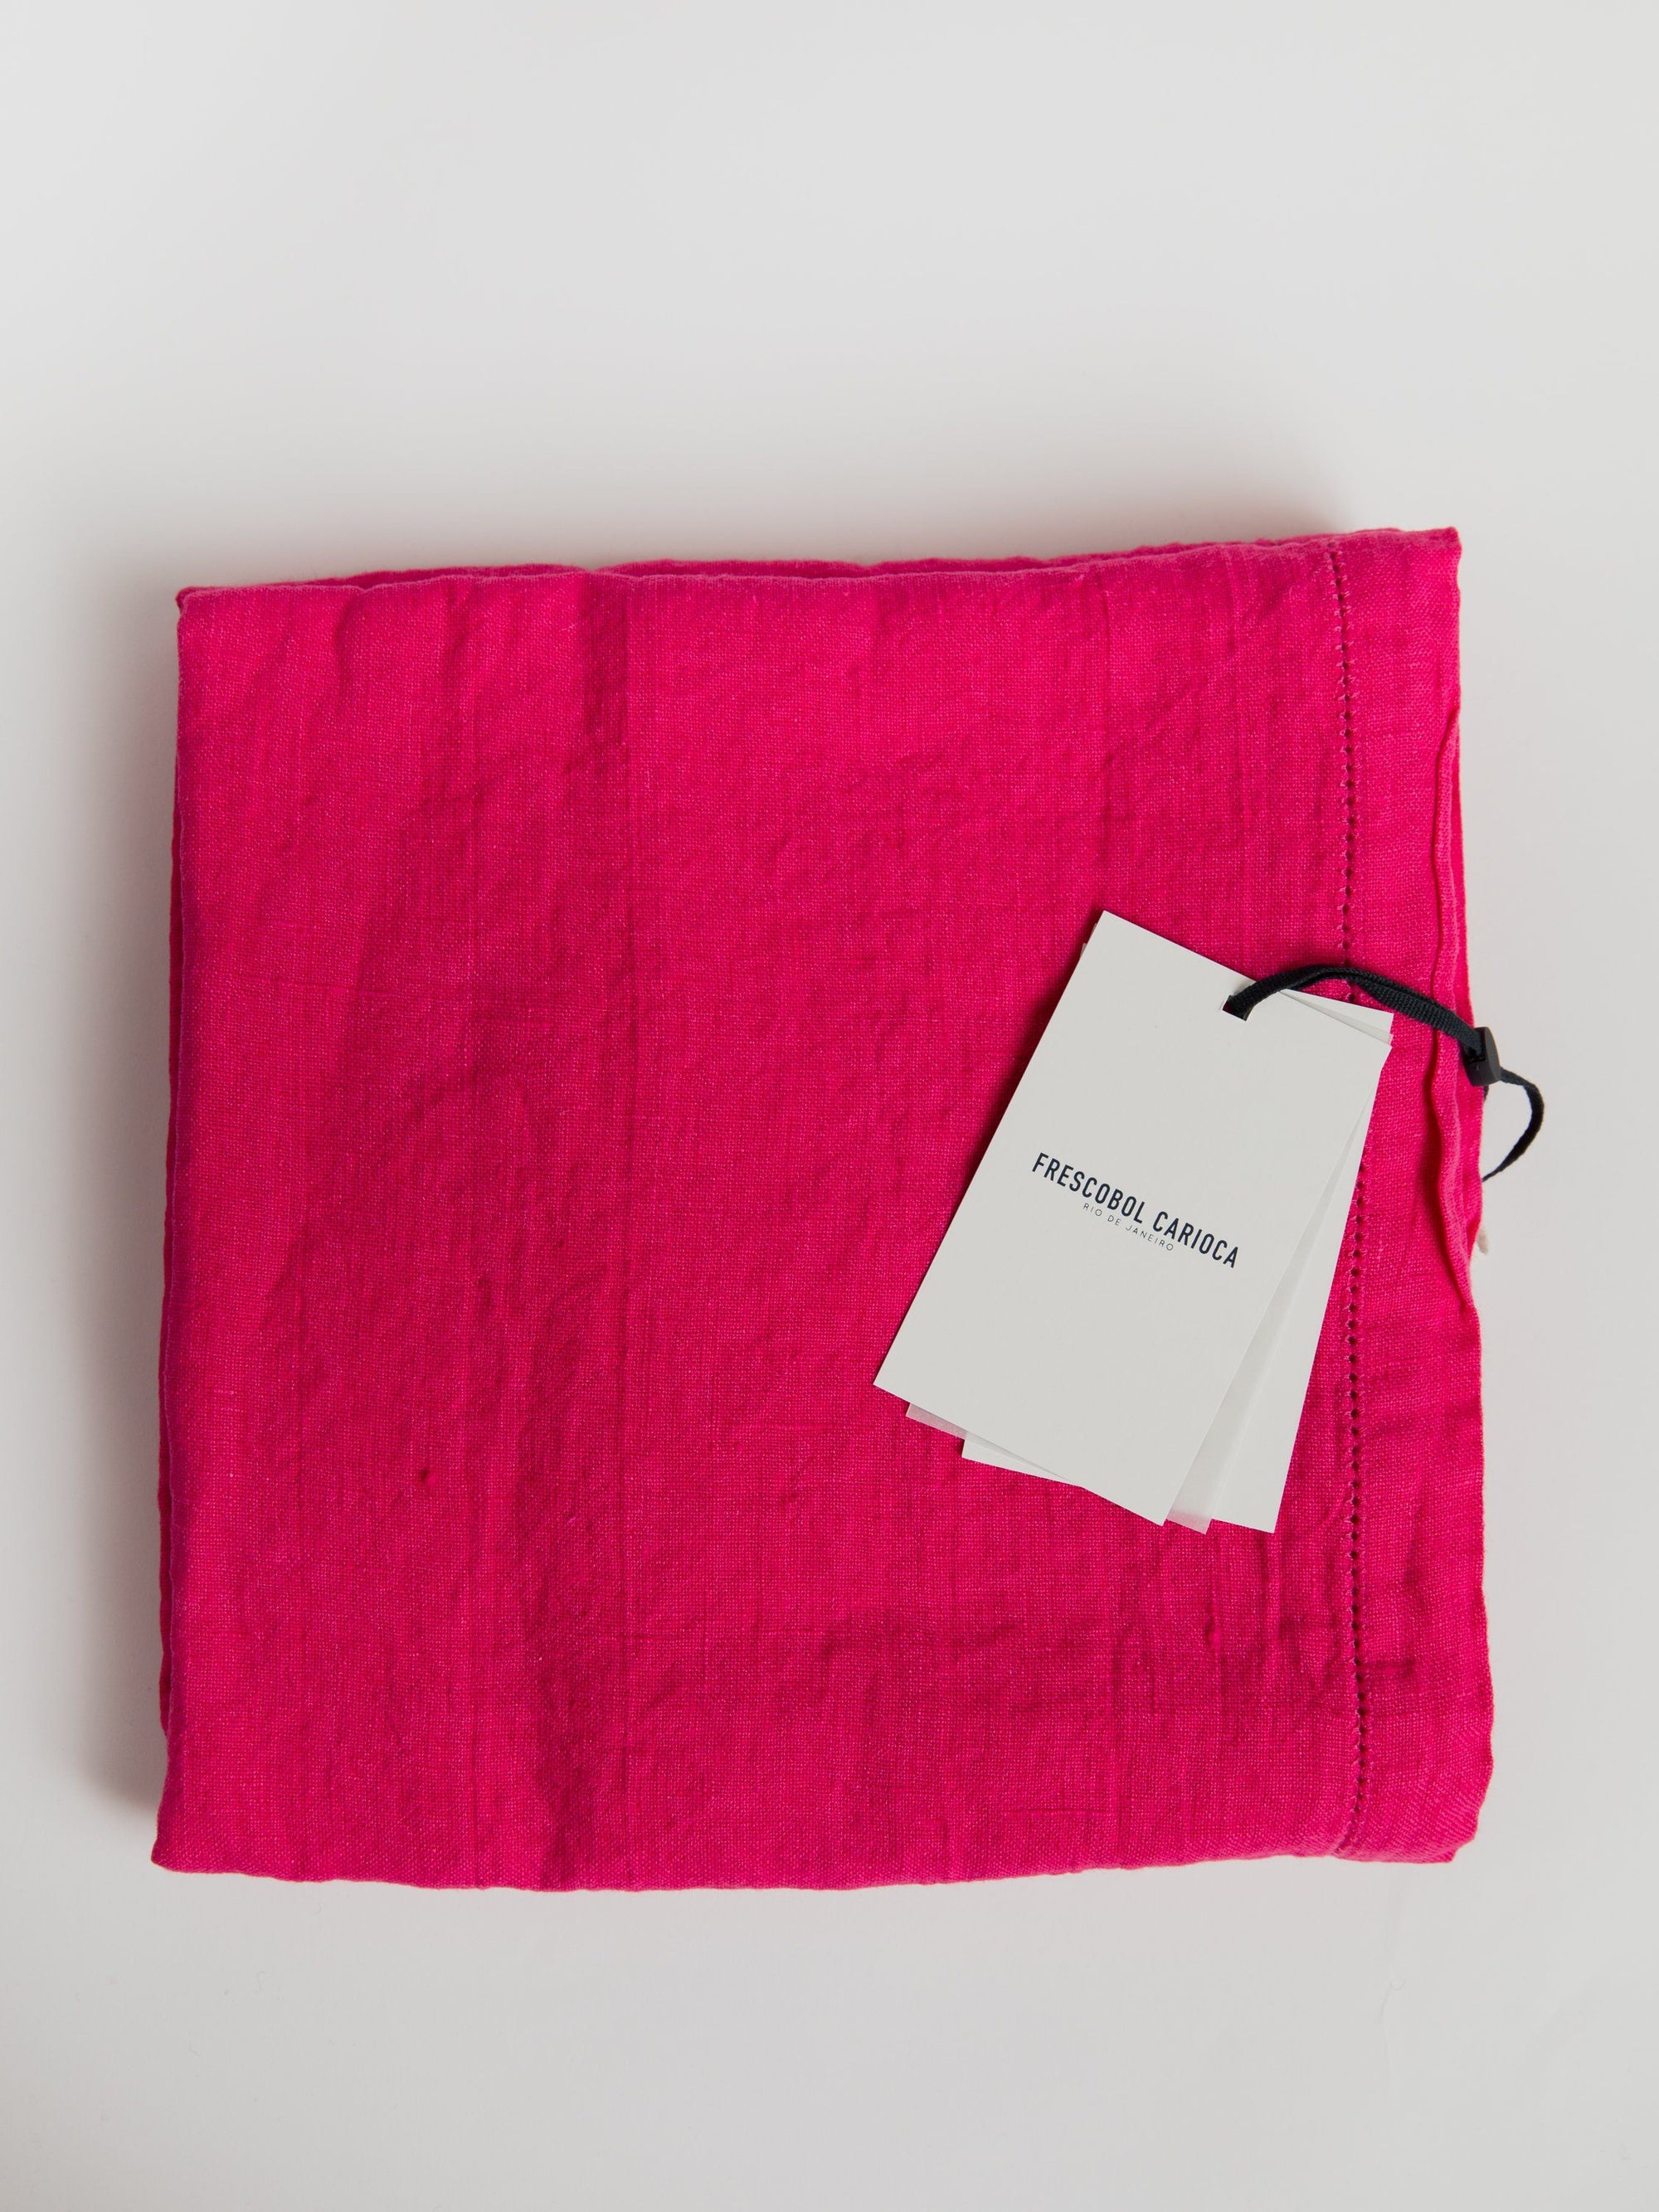 Linen Beach Towel - Pink Towel Frescobol Carioca 